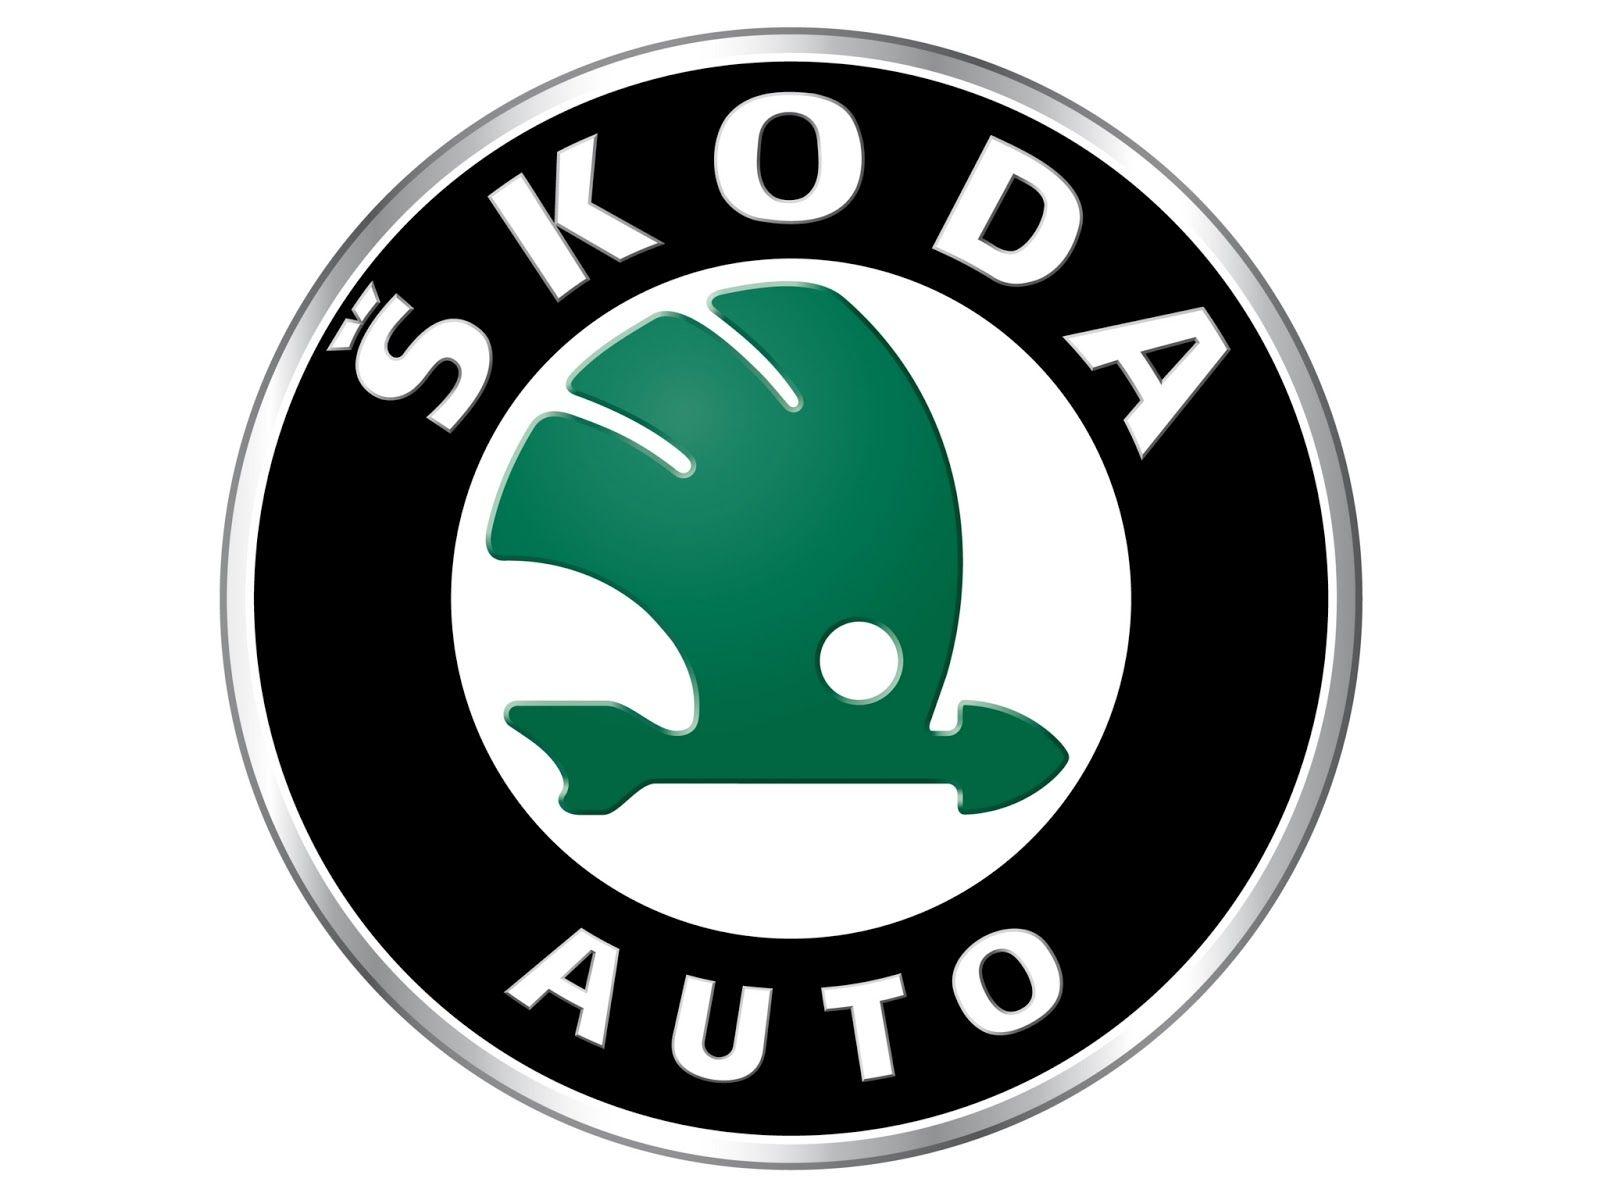 Old Skoda Logo - Škoda Logo, Škoda Car Symbol Meaning and History. Car Brand Names.com